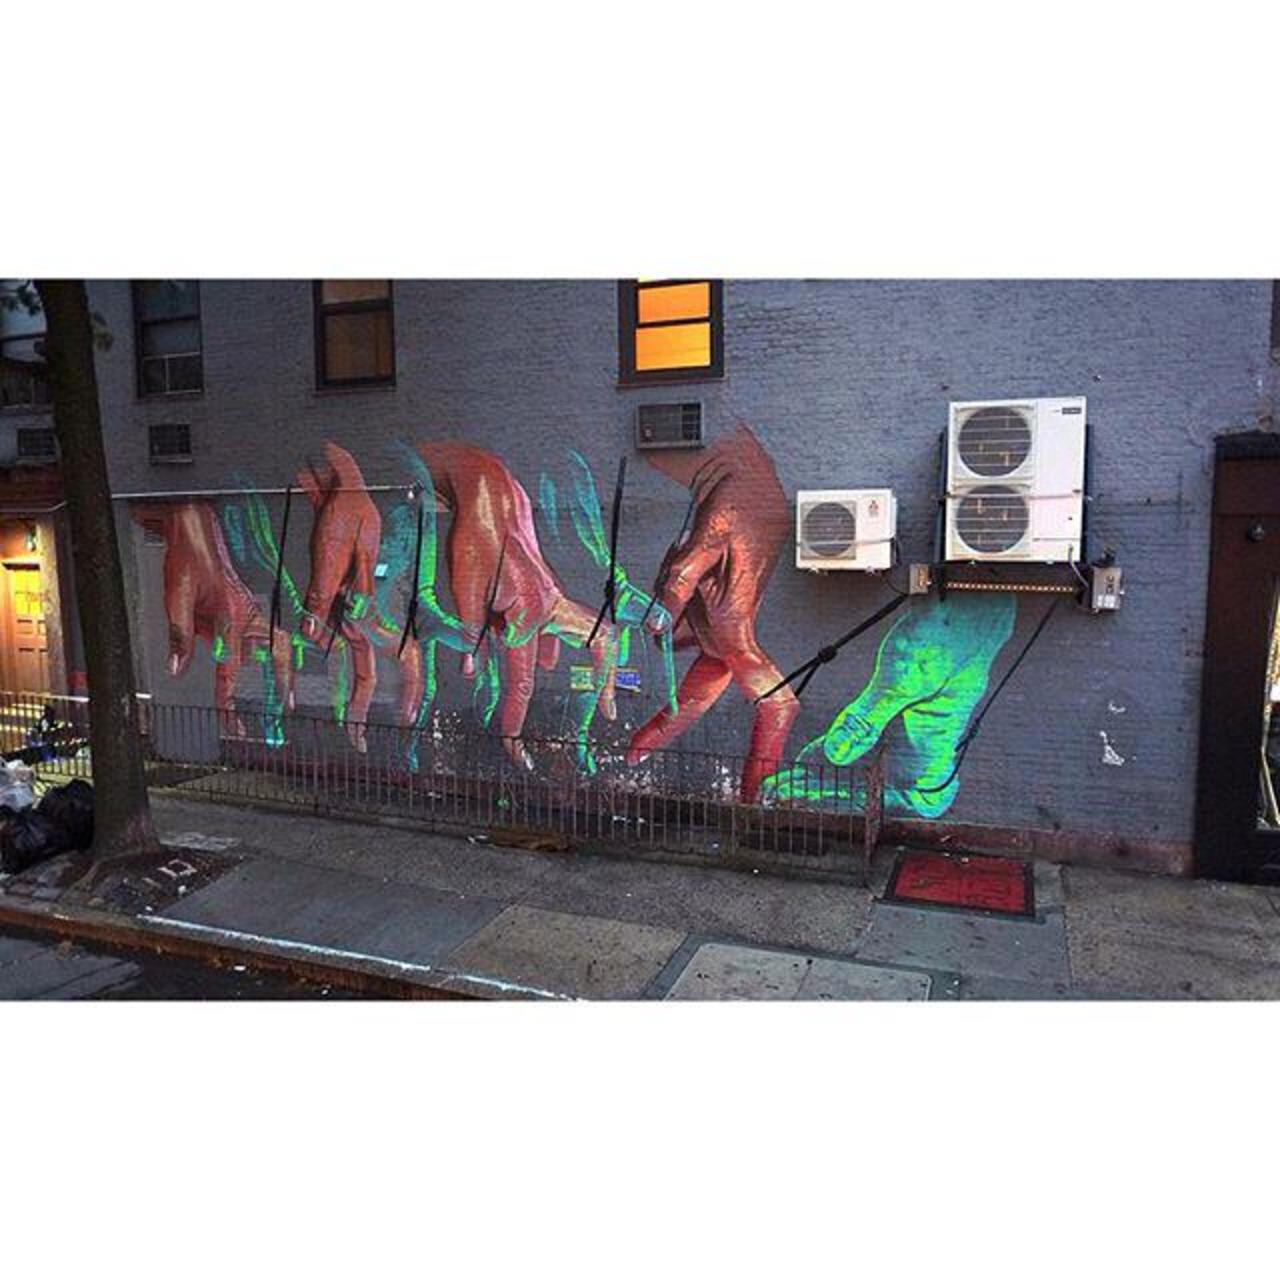 RT @cakozlem76: Casemaclaim #streetart #urbanart #graffiti http://t.co/6YOr7hbHqO